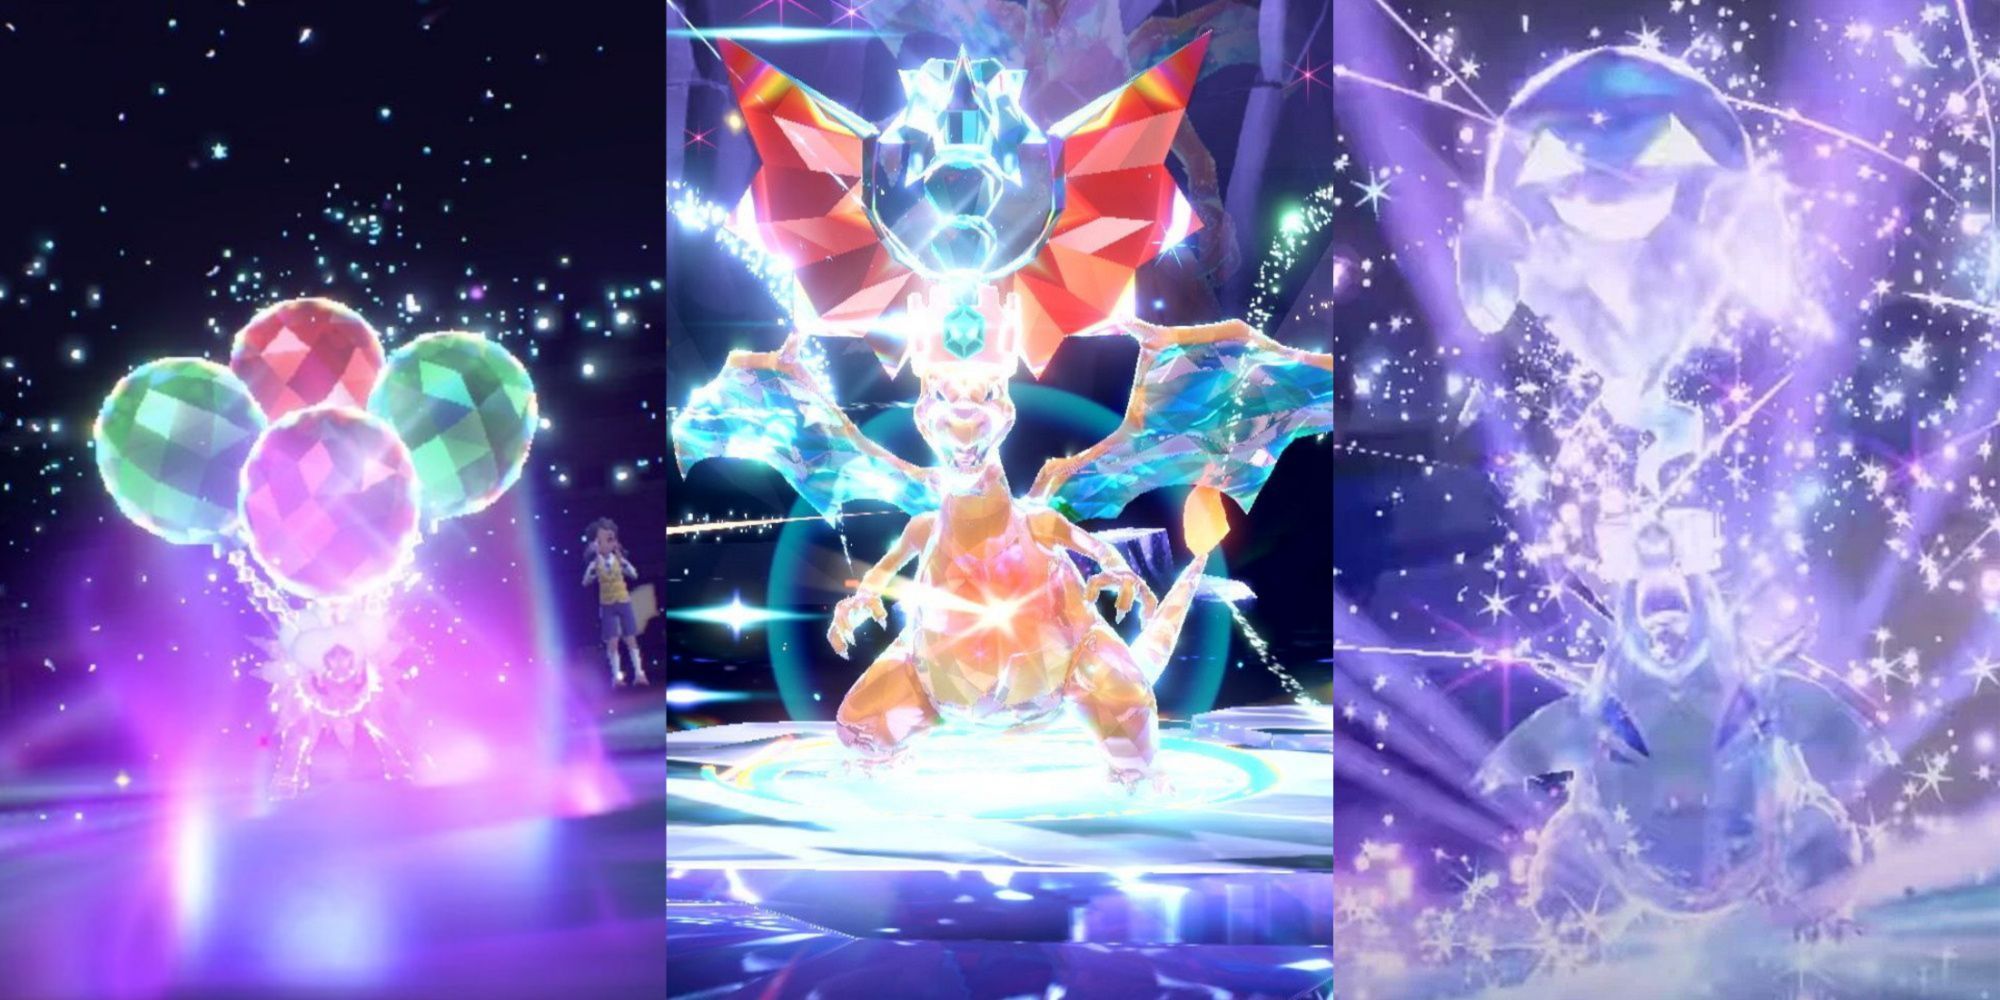 Can Tera Raid Pokémon be Shiny in Pokémon Scarlet and Violet